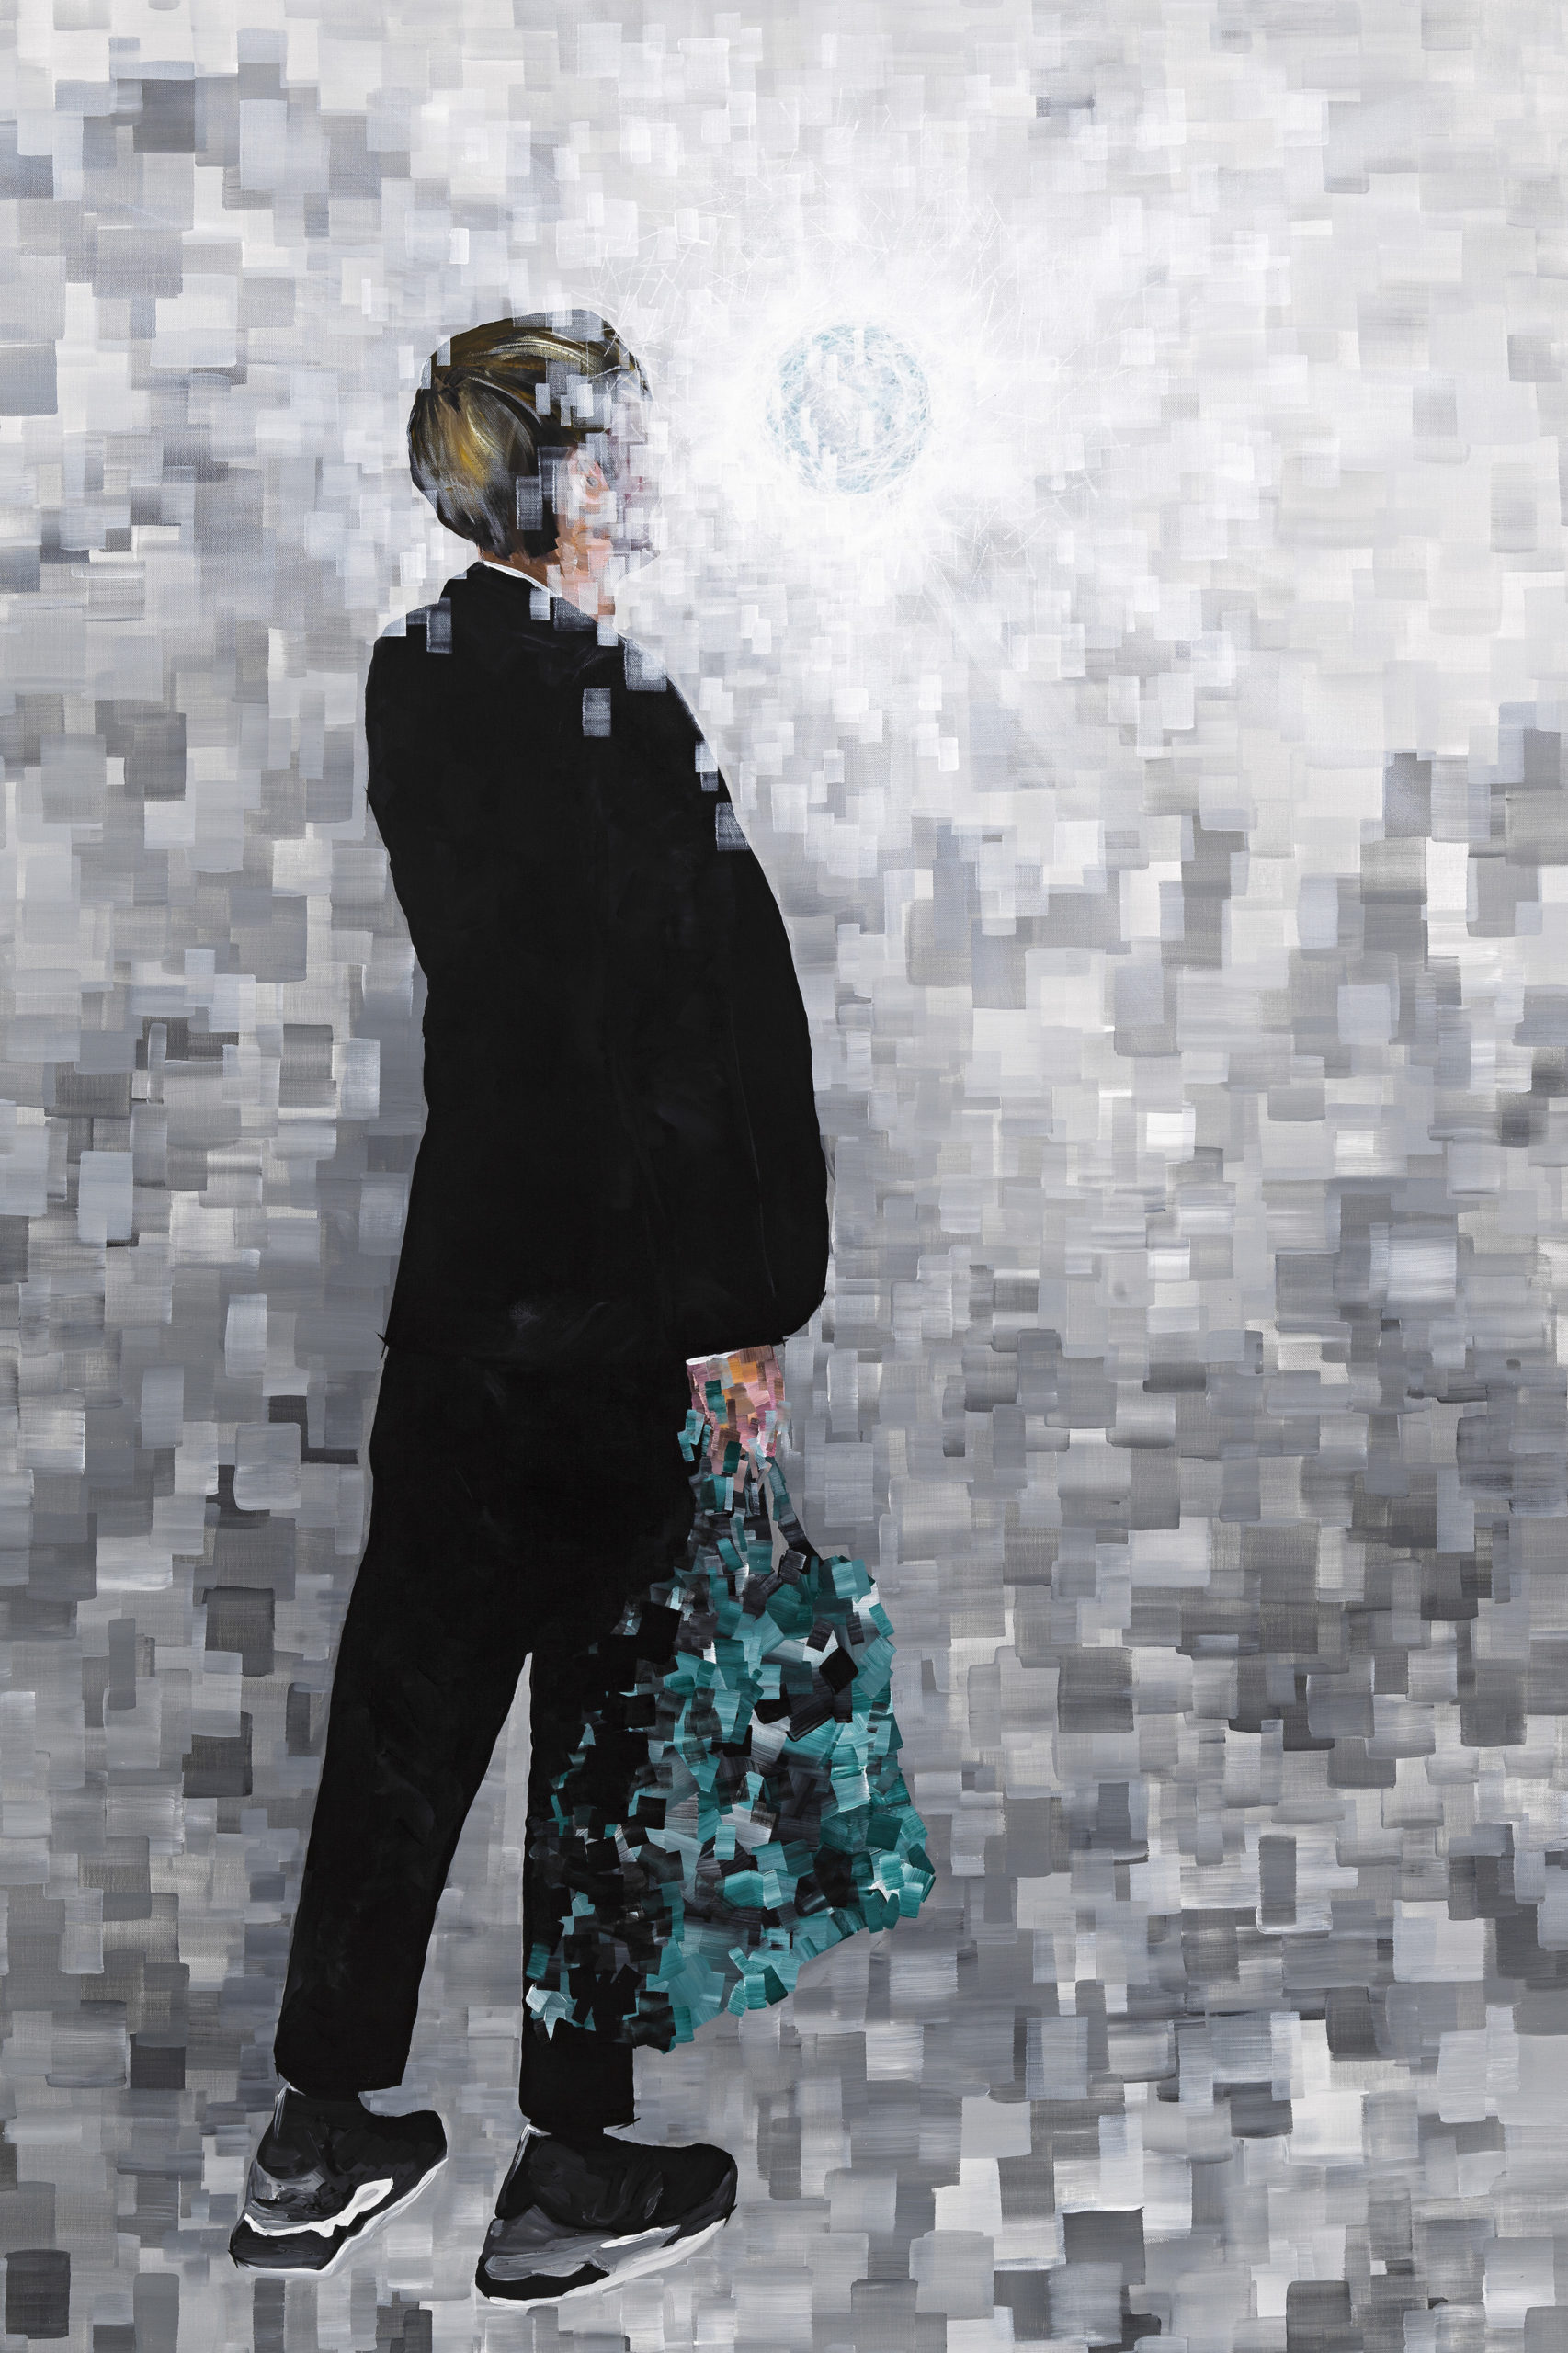 Francesco Totaro, Crossings 19, 2019, acrilico su tela, 150x100 cm